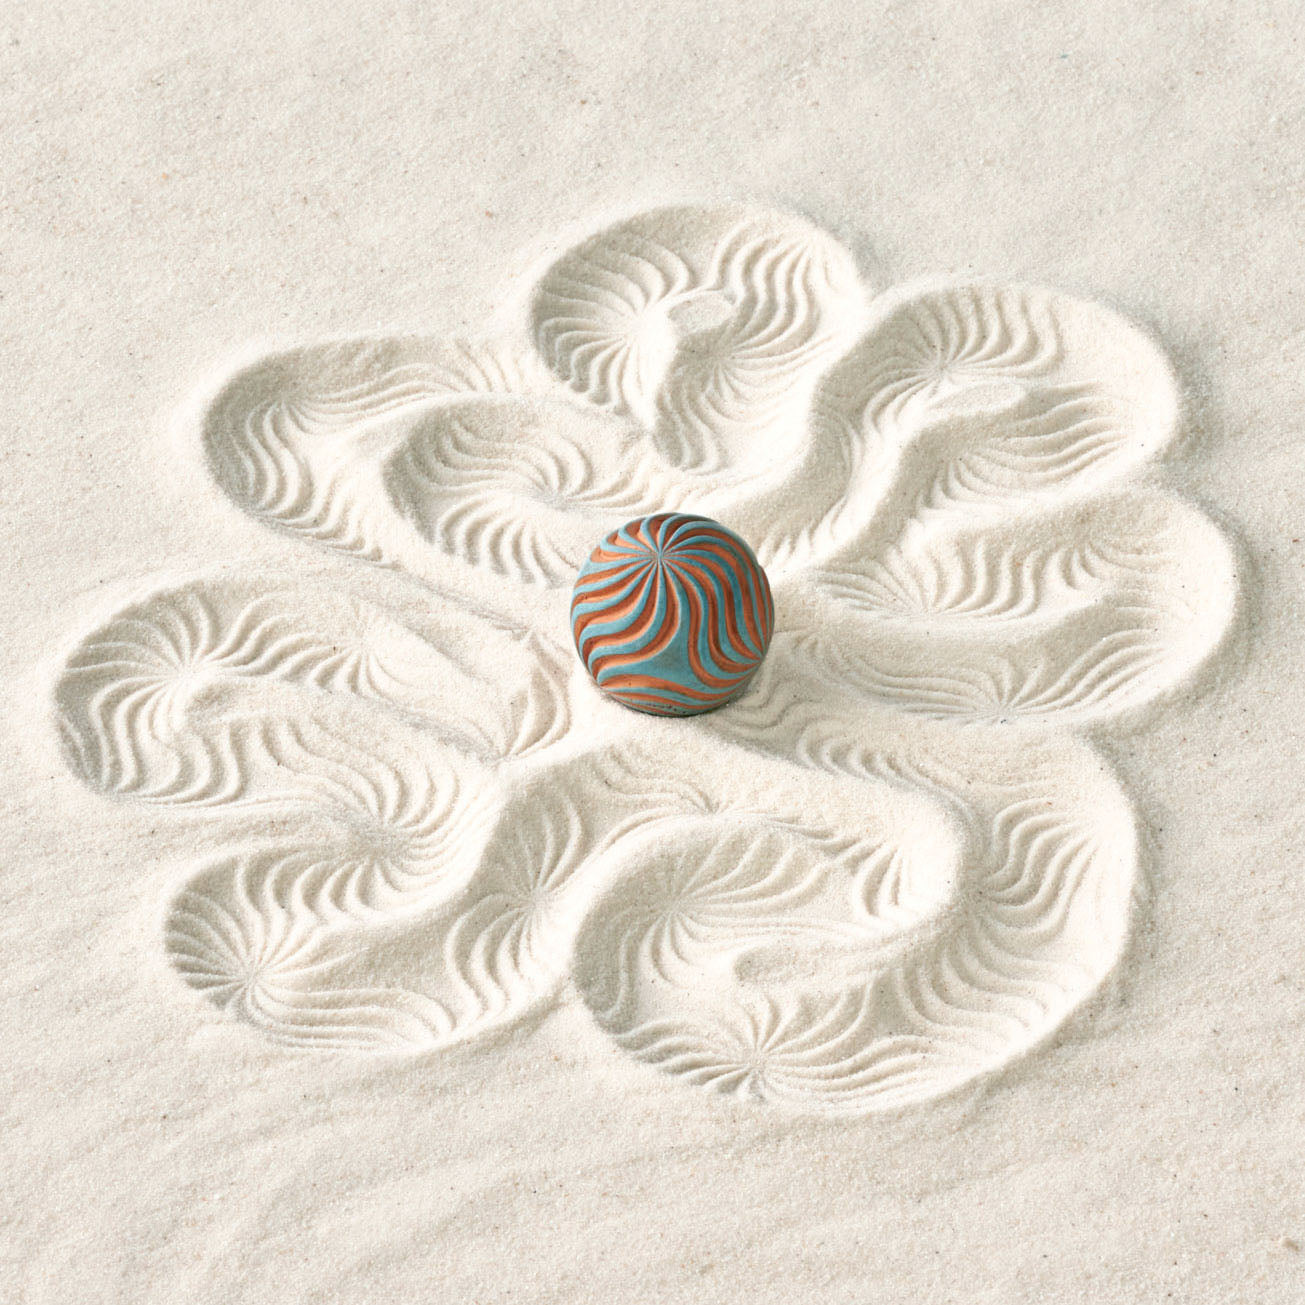 sand tray play miniature texture tool